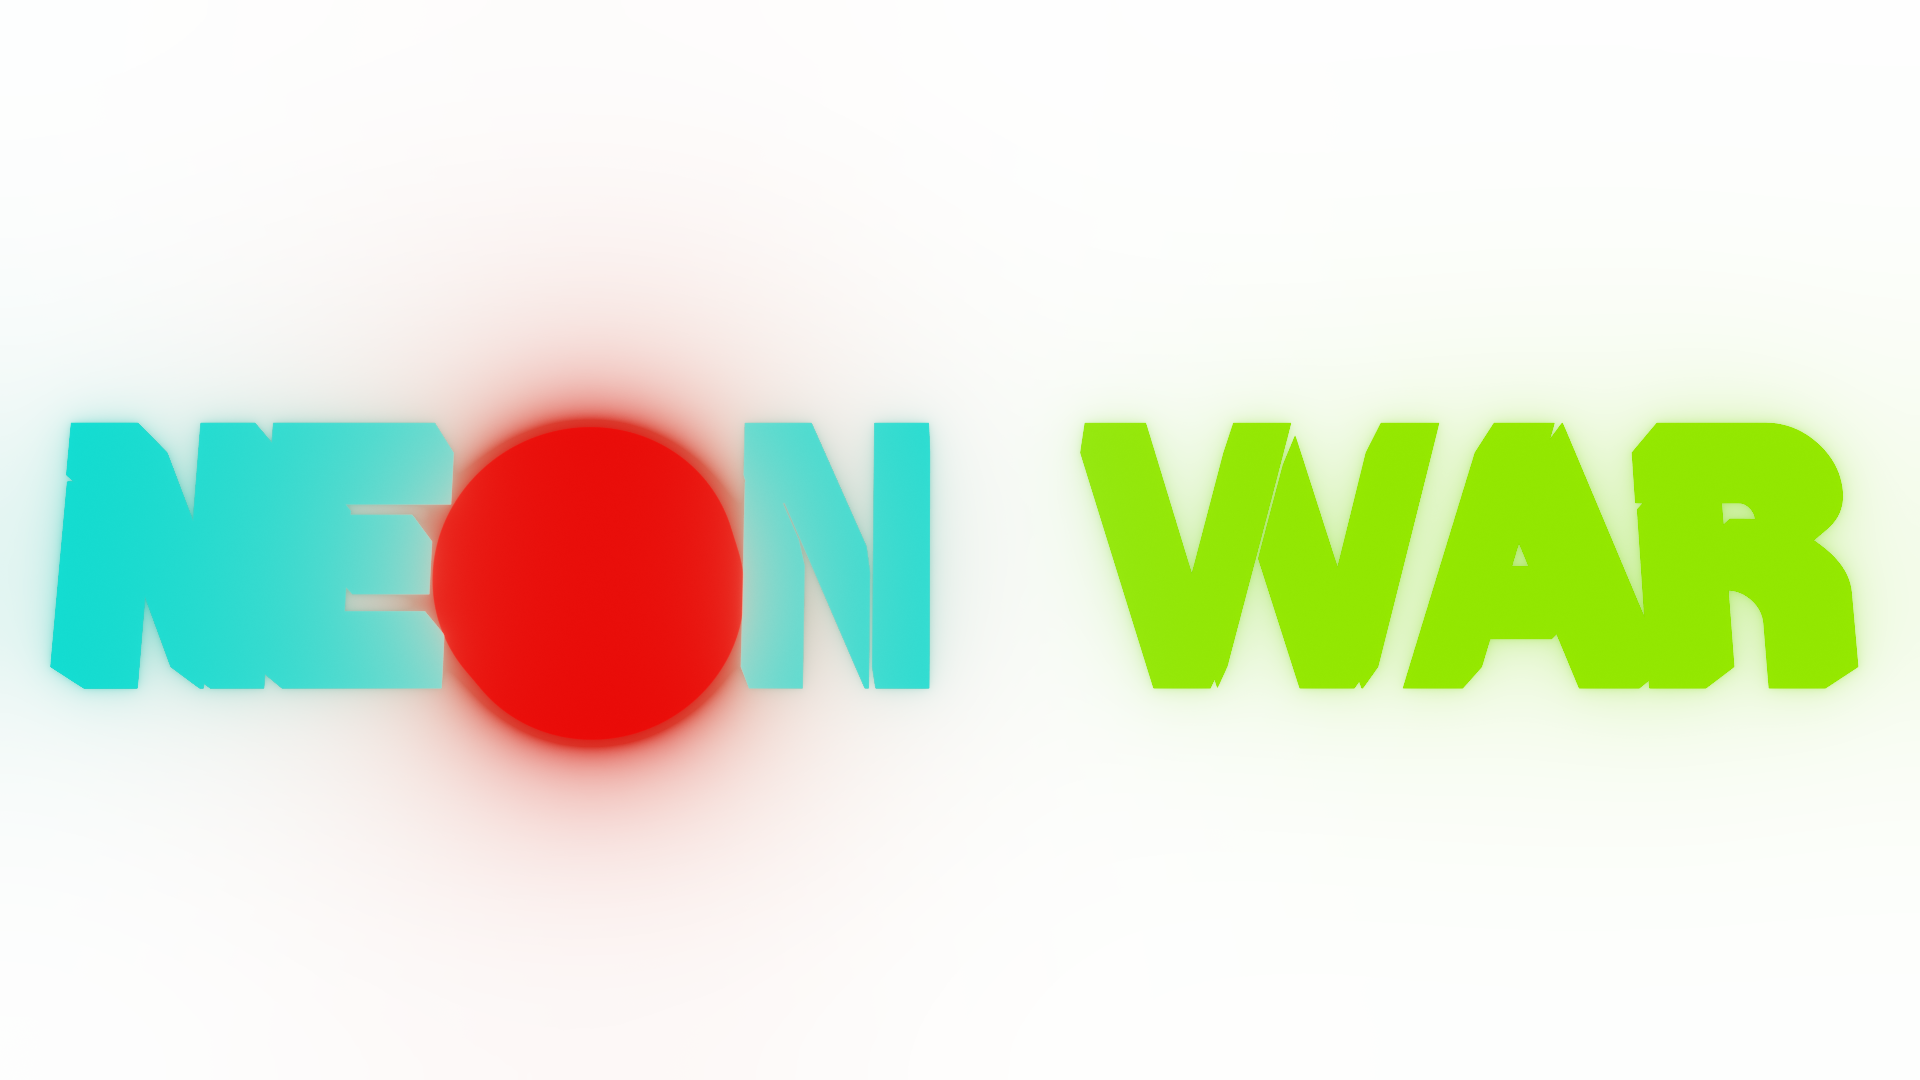 Neon War